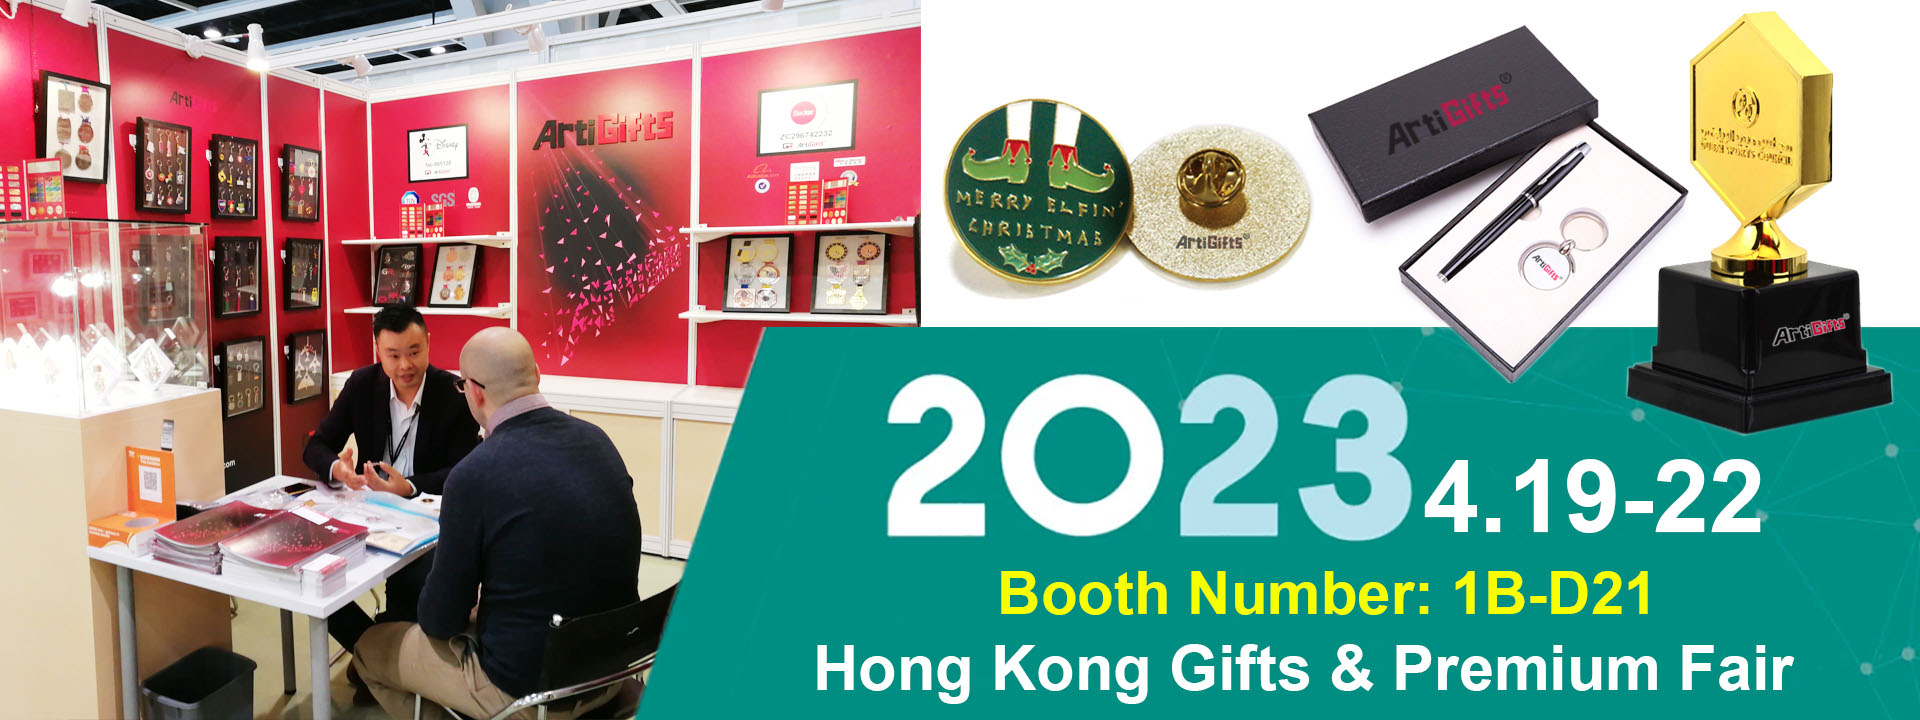 Zhongshan Artigifts Premium Metal & Plastic Co., Ltd.Invites You to Visit Our Booth at Hong Kong Gifts & Premium Fair